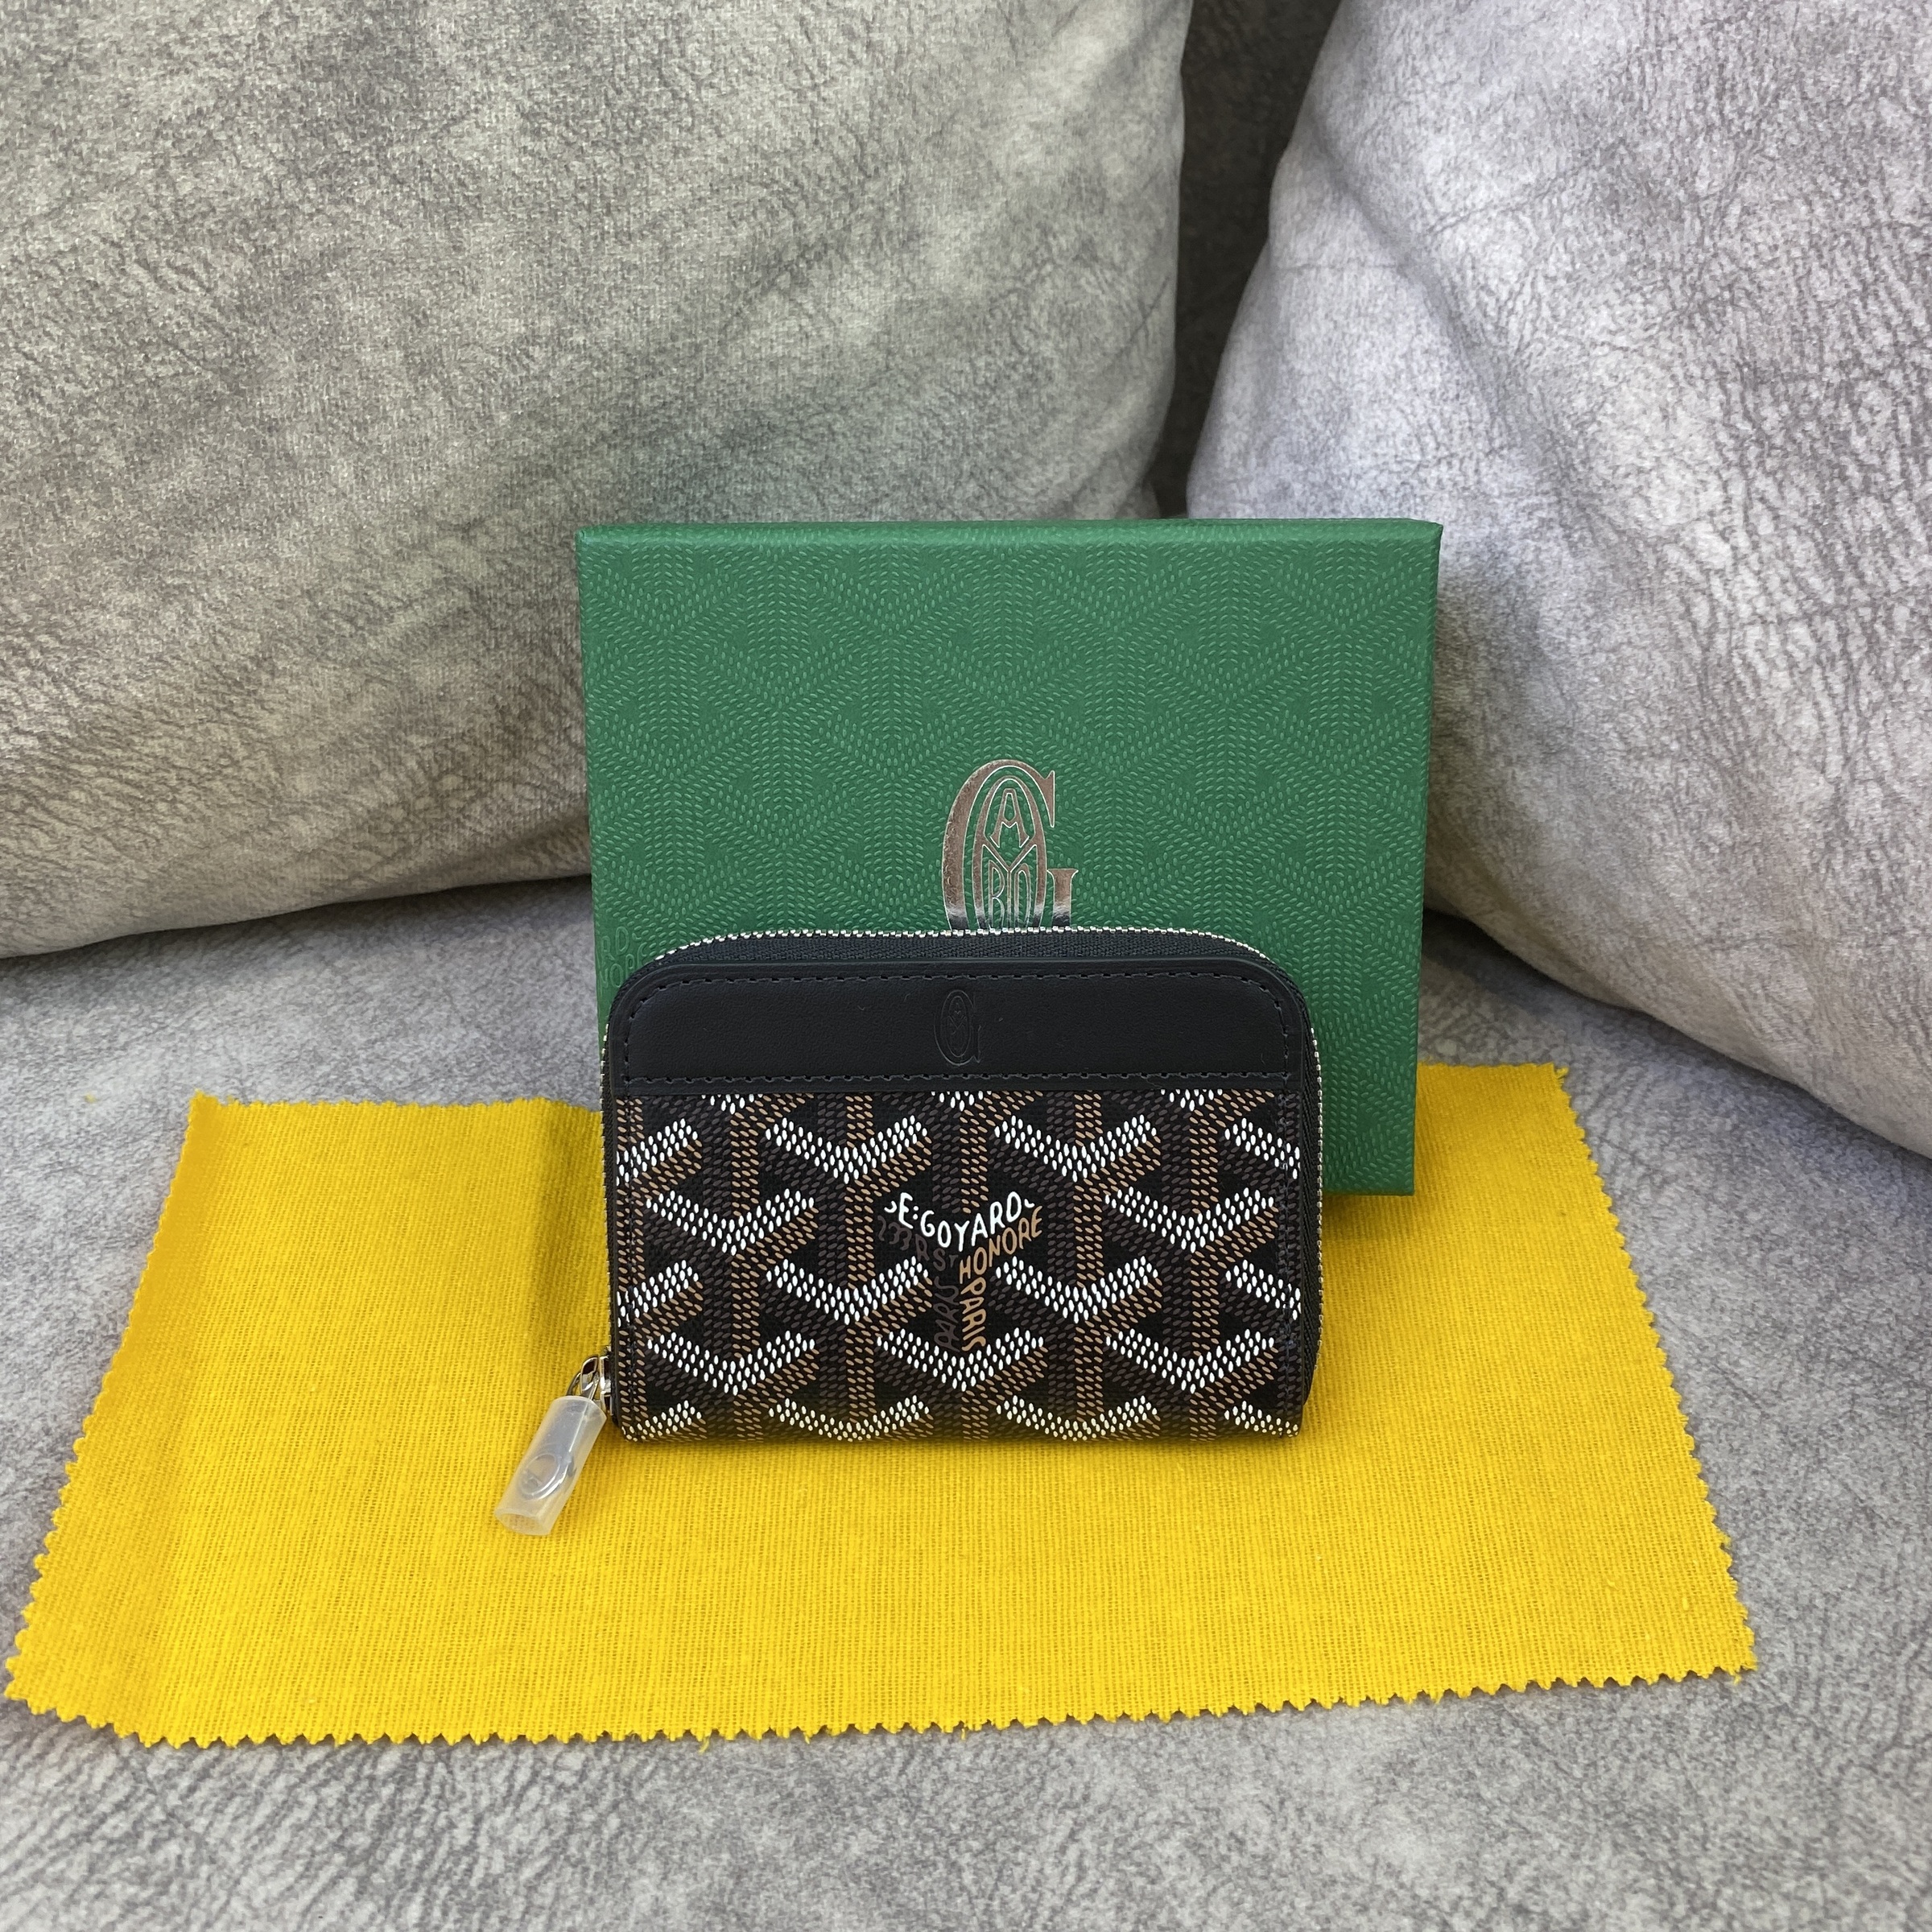 Goyard Matignon Mini Wallet